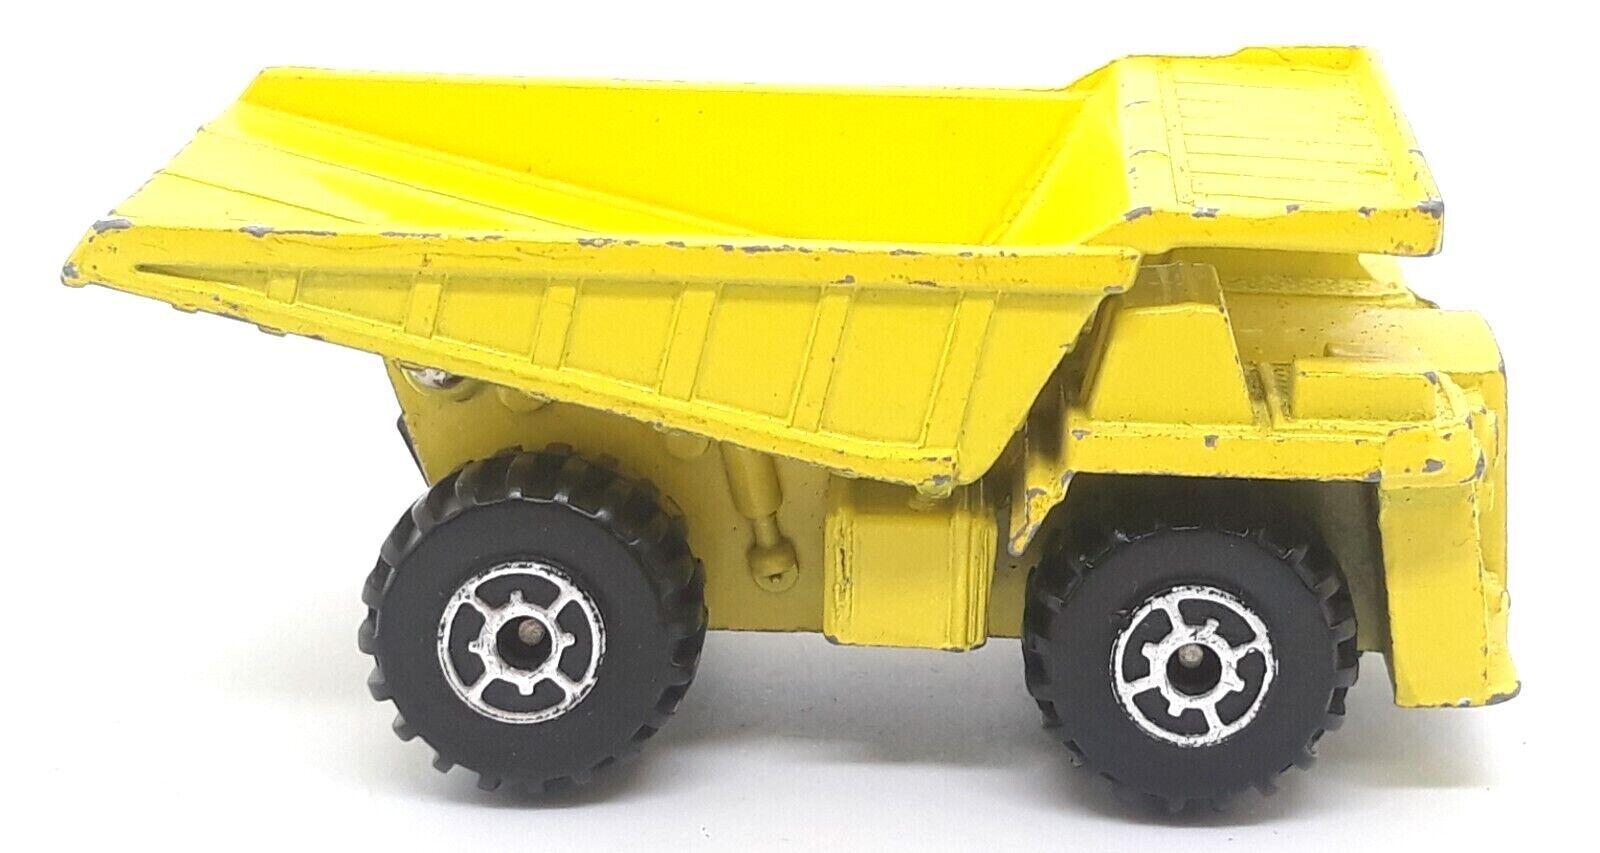 1983 Road Champs Hard Hats Construction Dump Truck Yellow No.6109b 1:64 Scale - $4.99